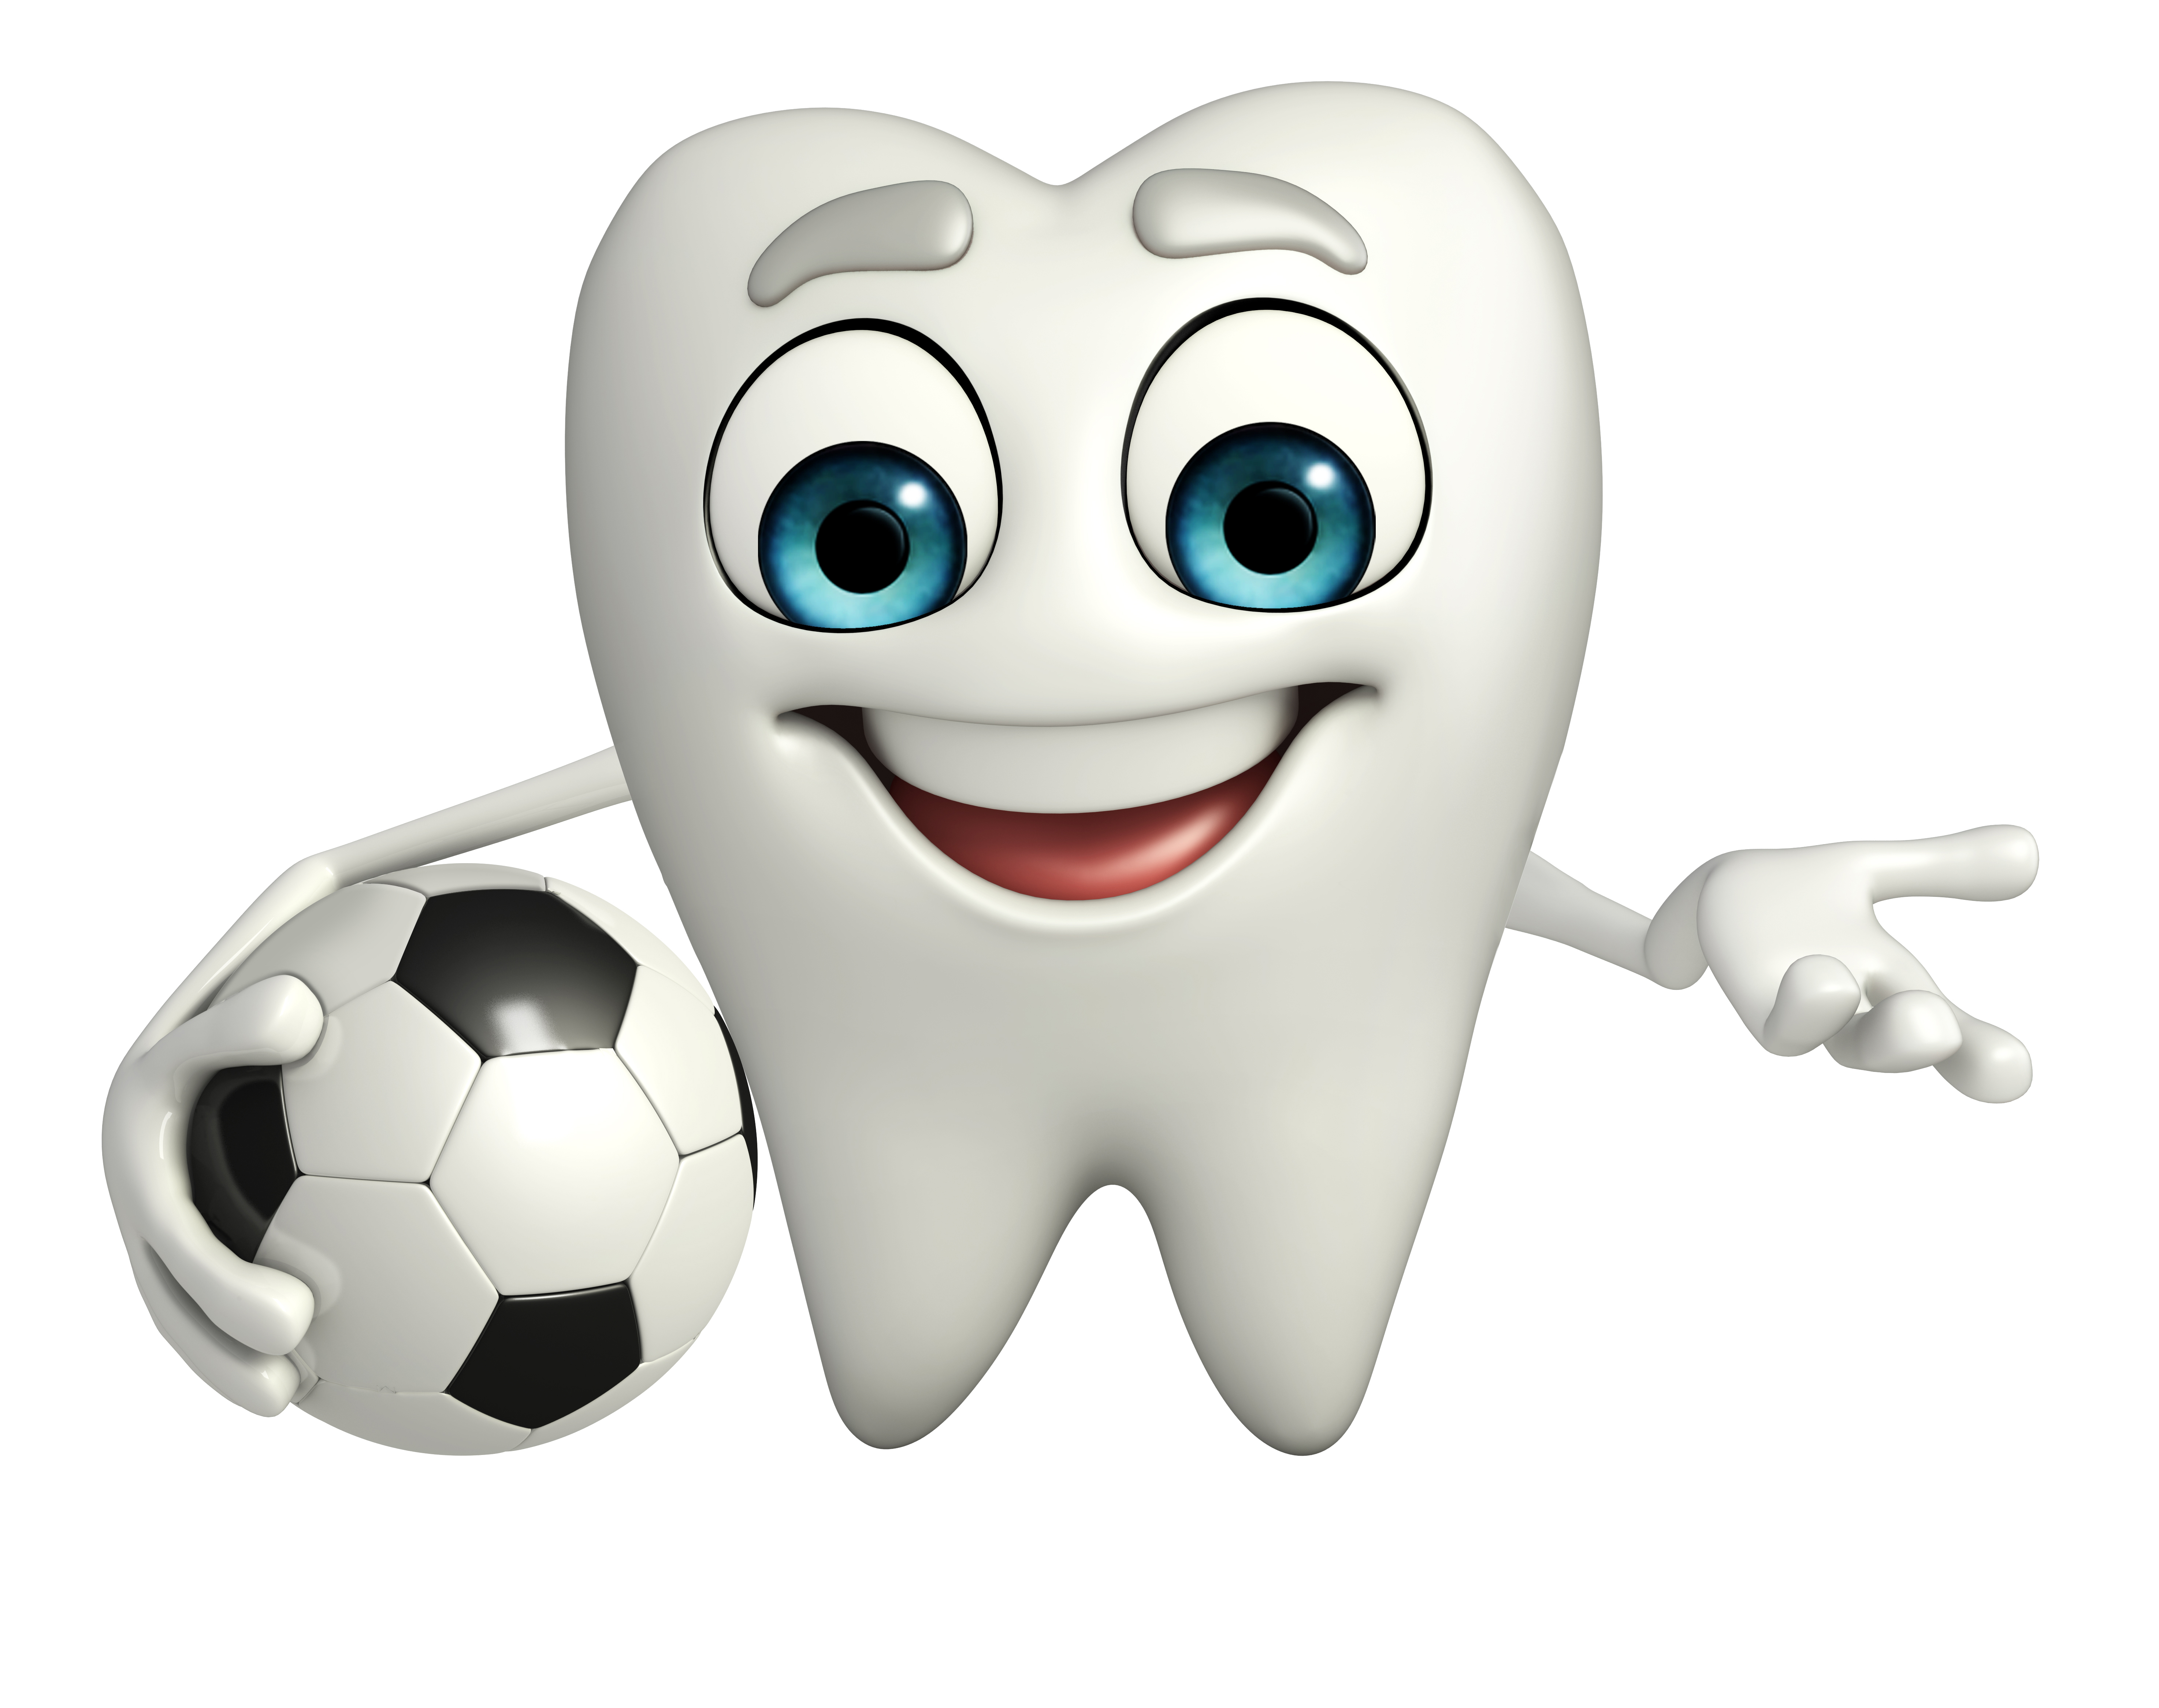 Newcastle dental team signs new deal with Jesmond football club